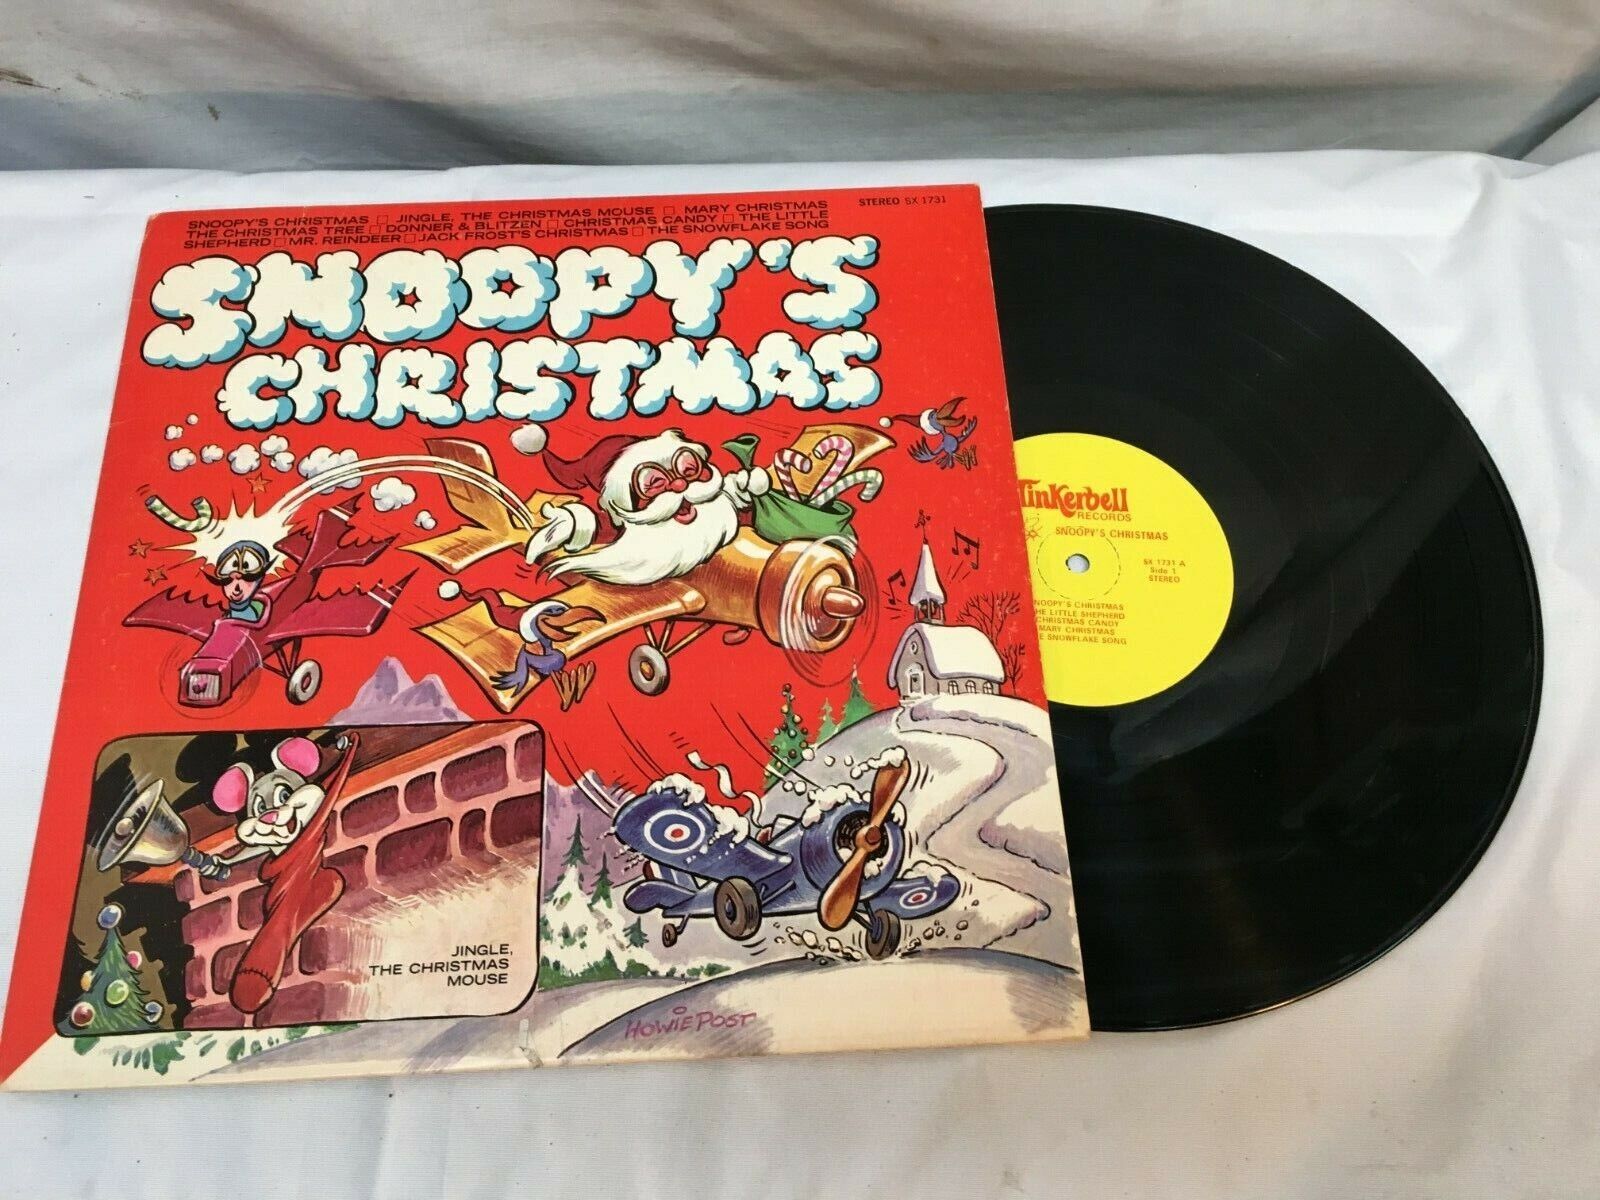 Vintage “Snoopy's Christmas” Record SX1731, Jingle The Christmas Mouse VG+